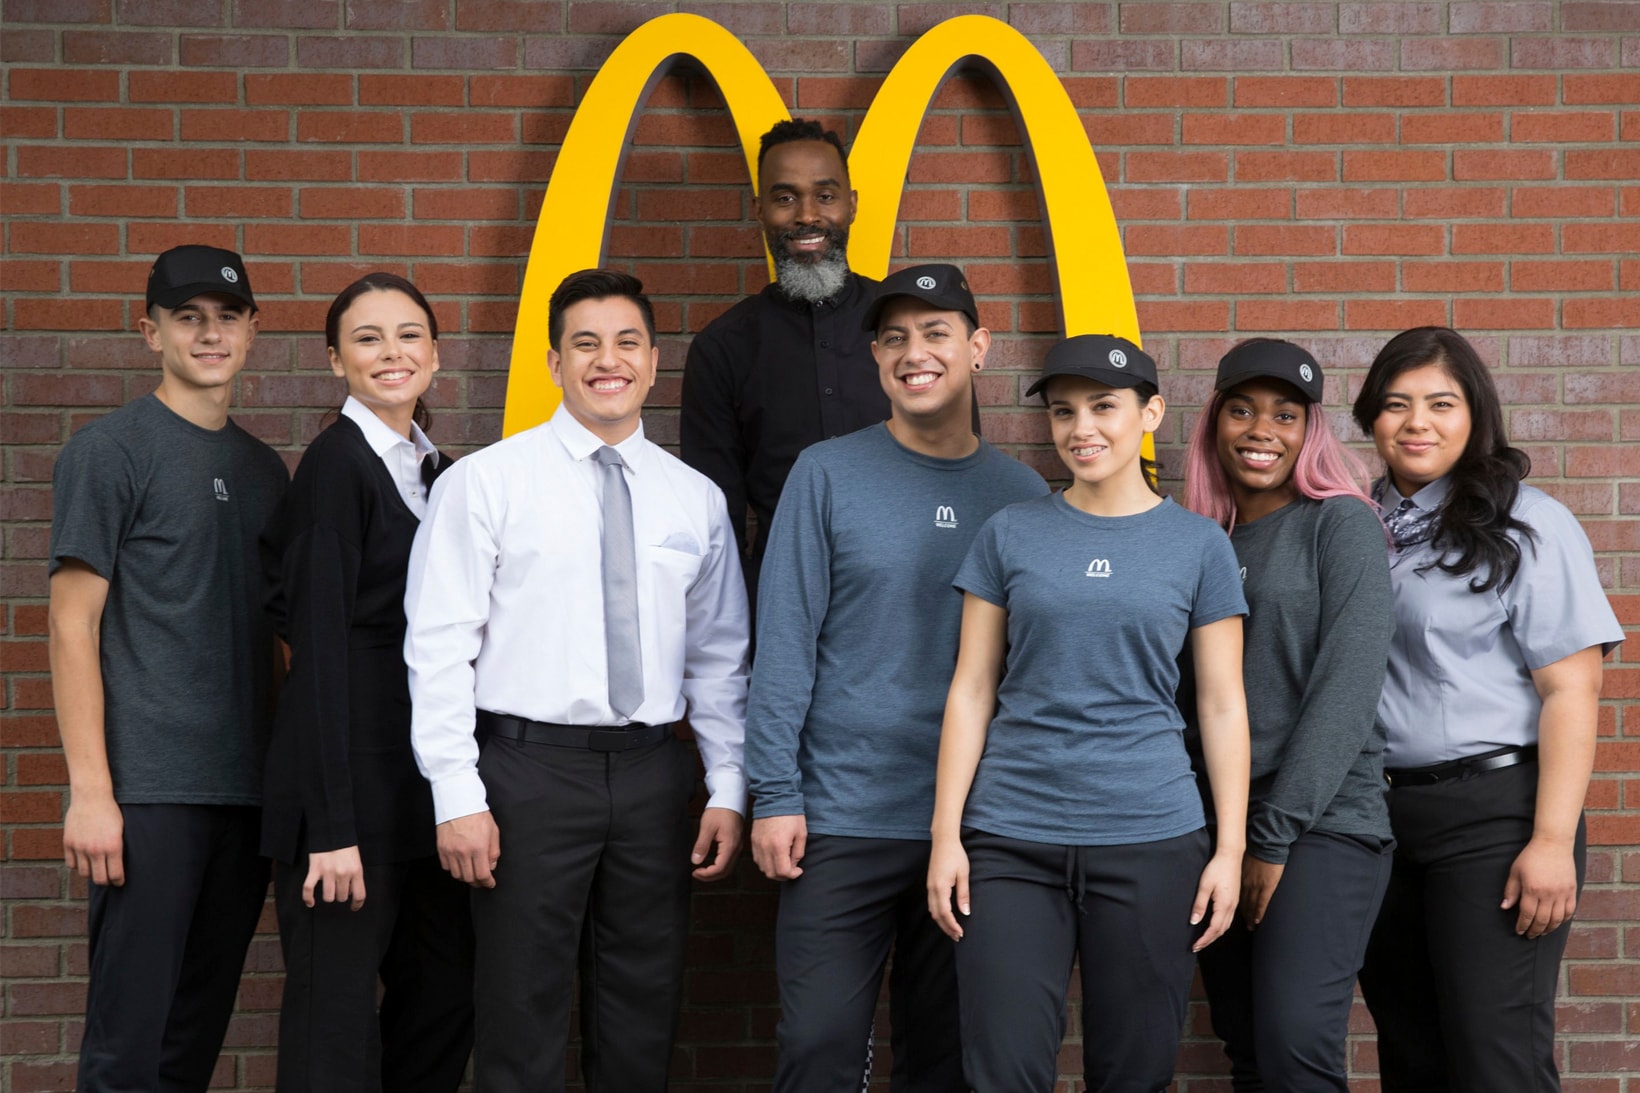 McDonald's New Uniforms Waraire Boswell